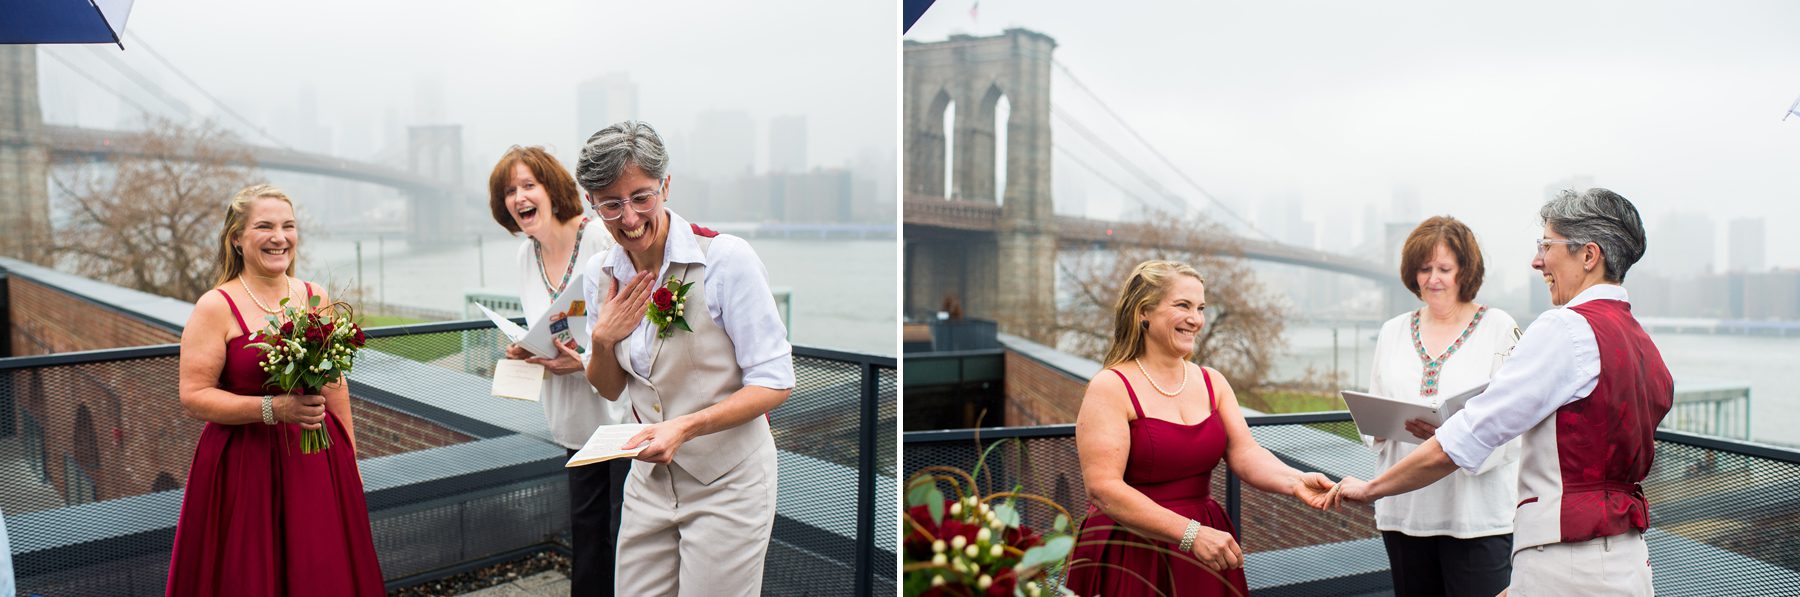 How to Get Married In Brooklyn Bridge Park 